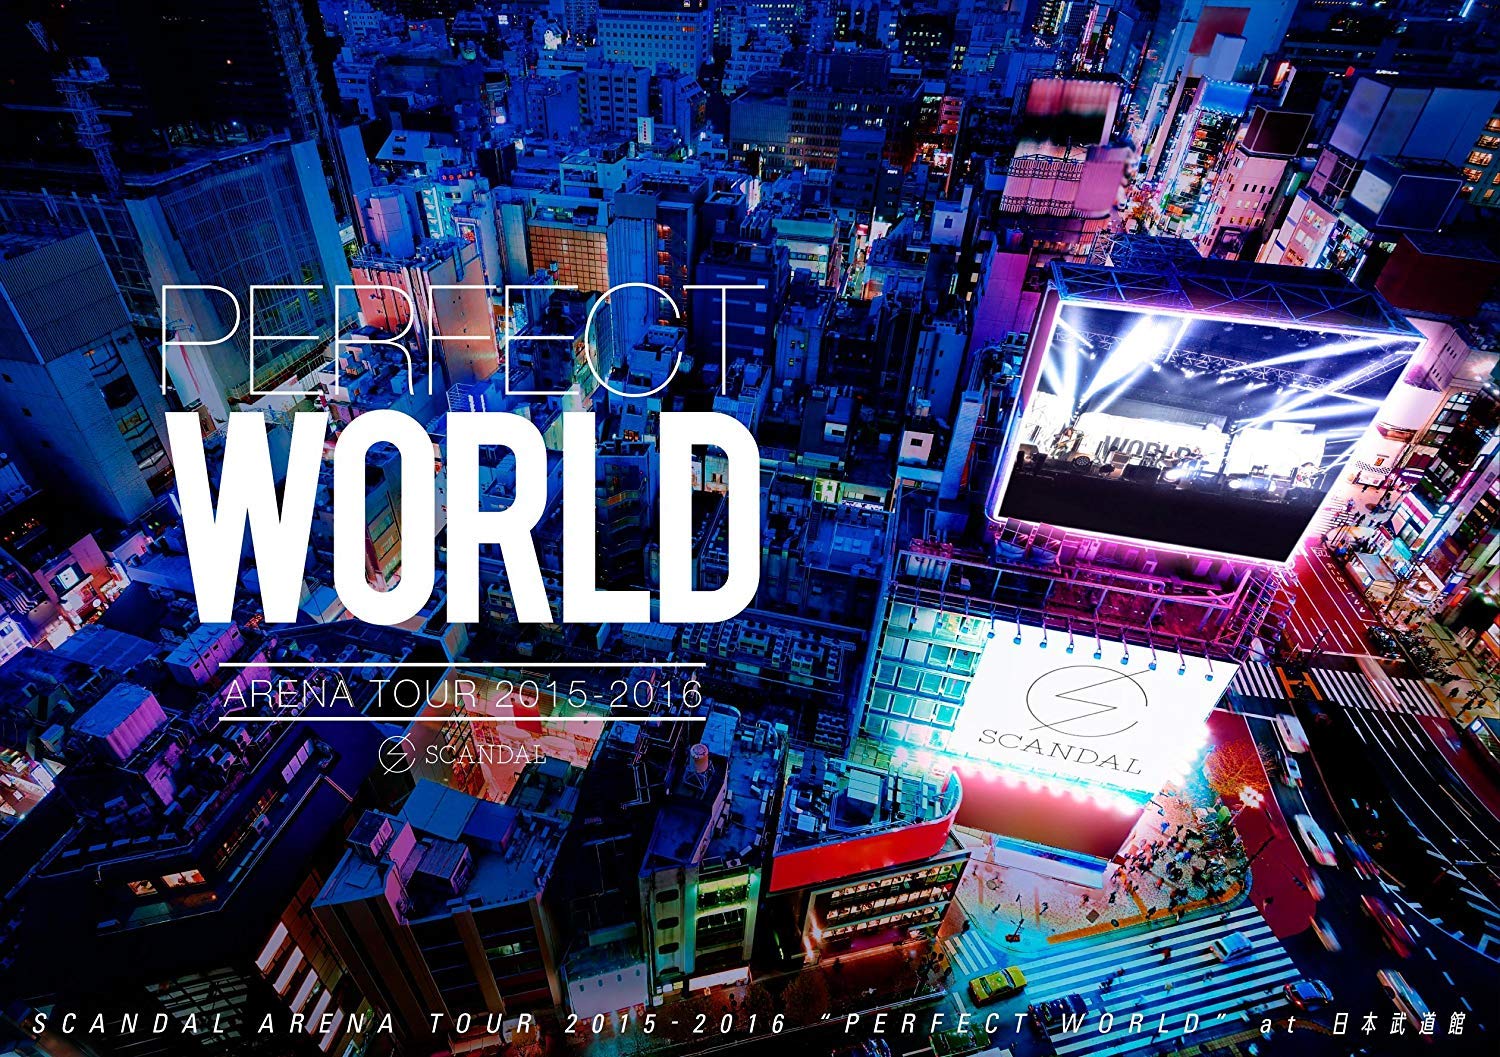 SCANDAL ARENA TOUR 2015-2016 PERFECT WORLD [DVD]